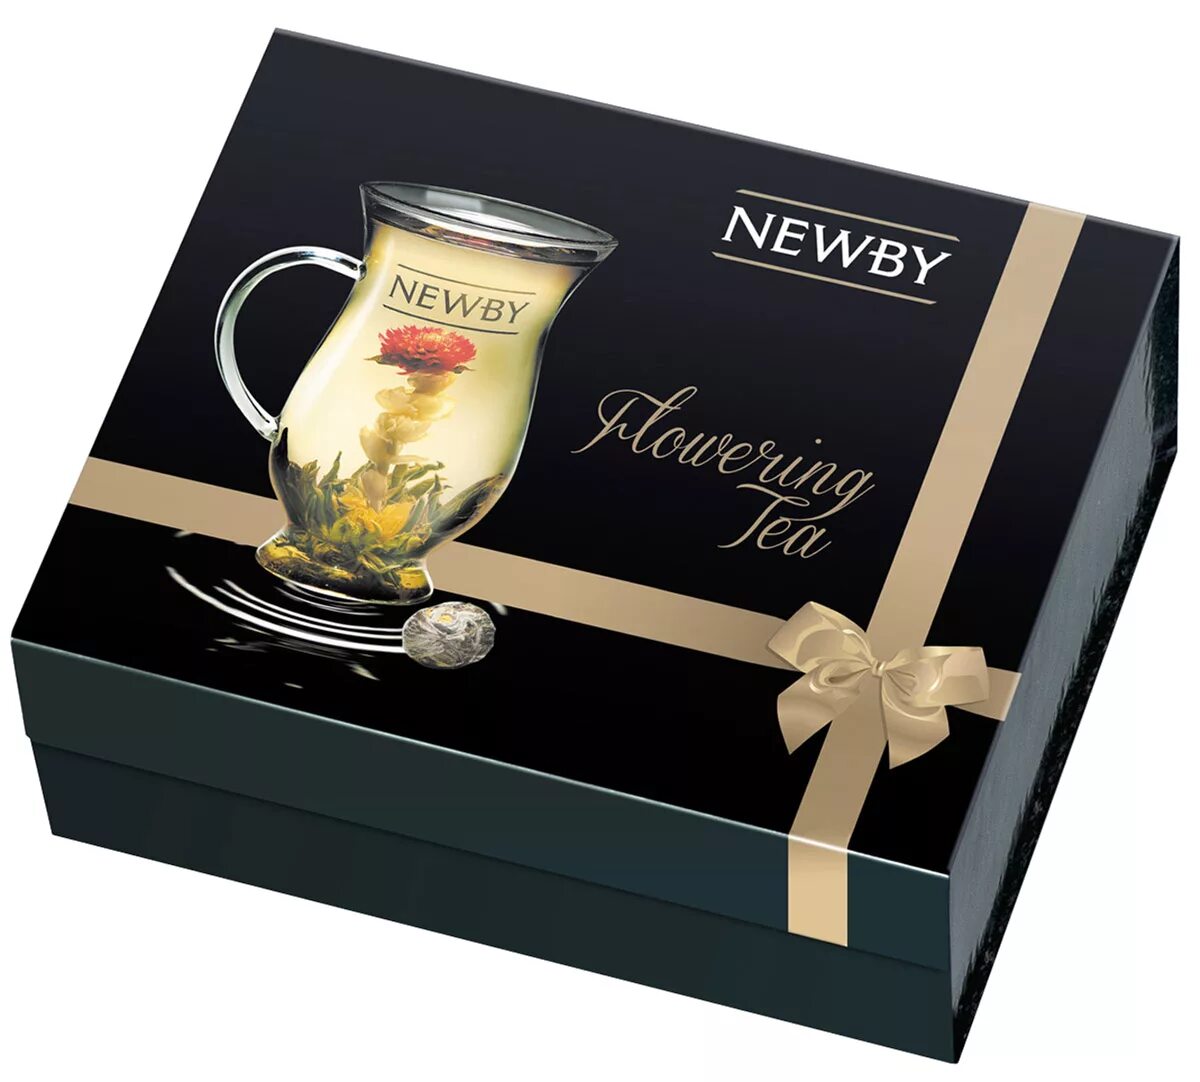 Чай Newby подарочный набор. Чай Newby набор чайный. Чай черный Newby Black Teas ассорти подарочный набор. Чай черный Newby Crown ассорти подарочный набор. Где купить подарочный чай